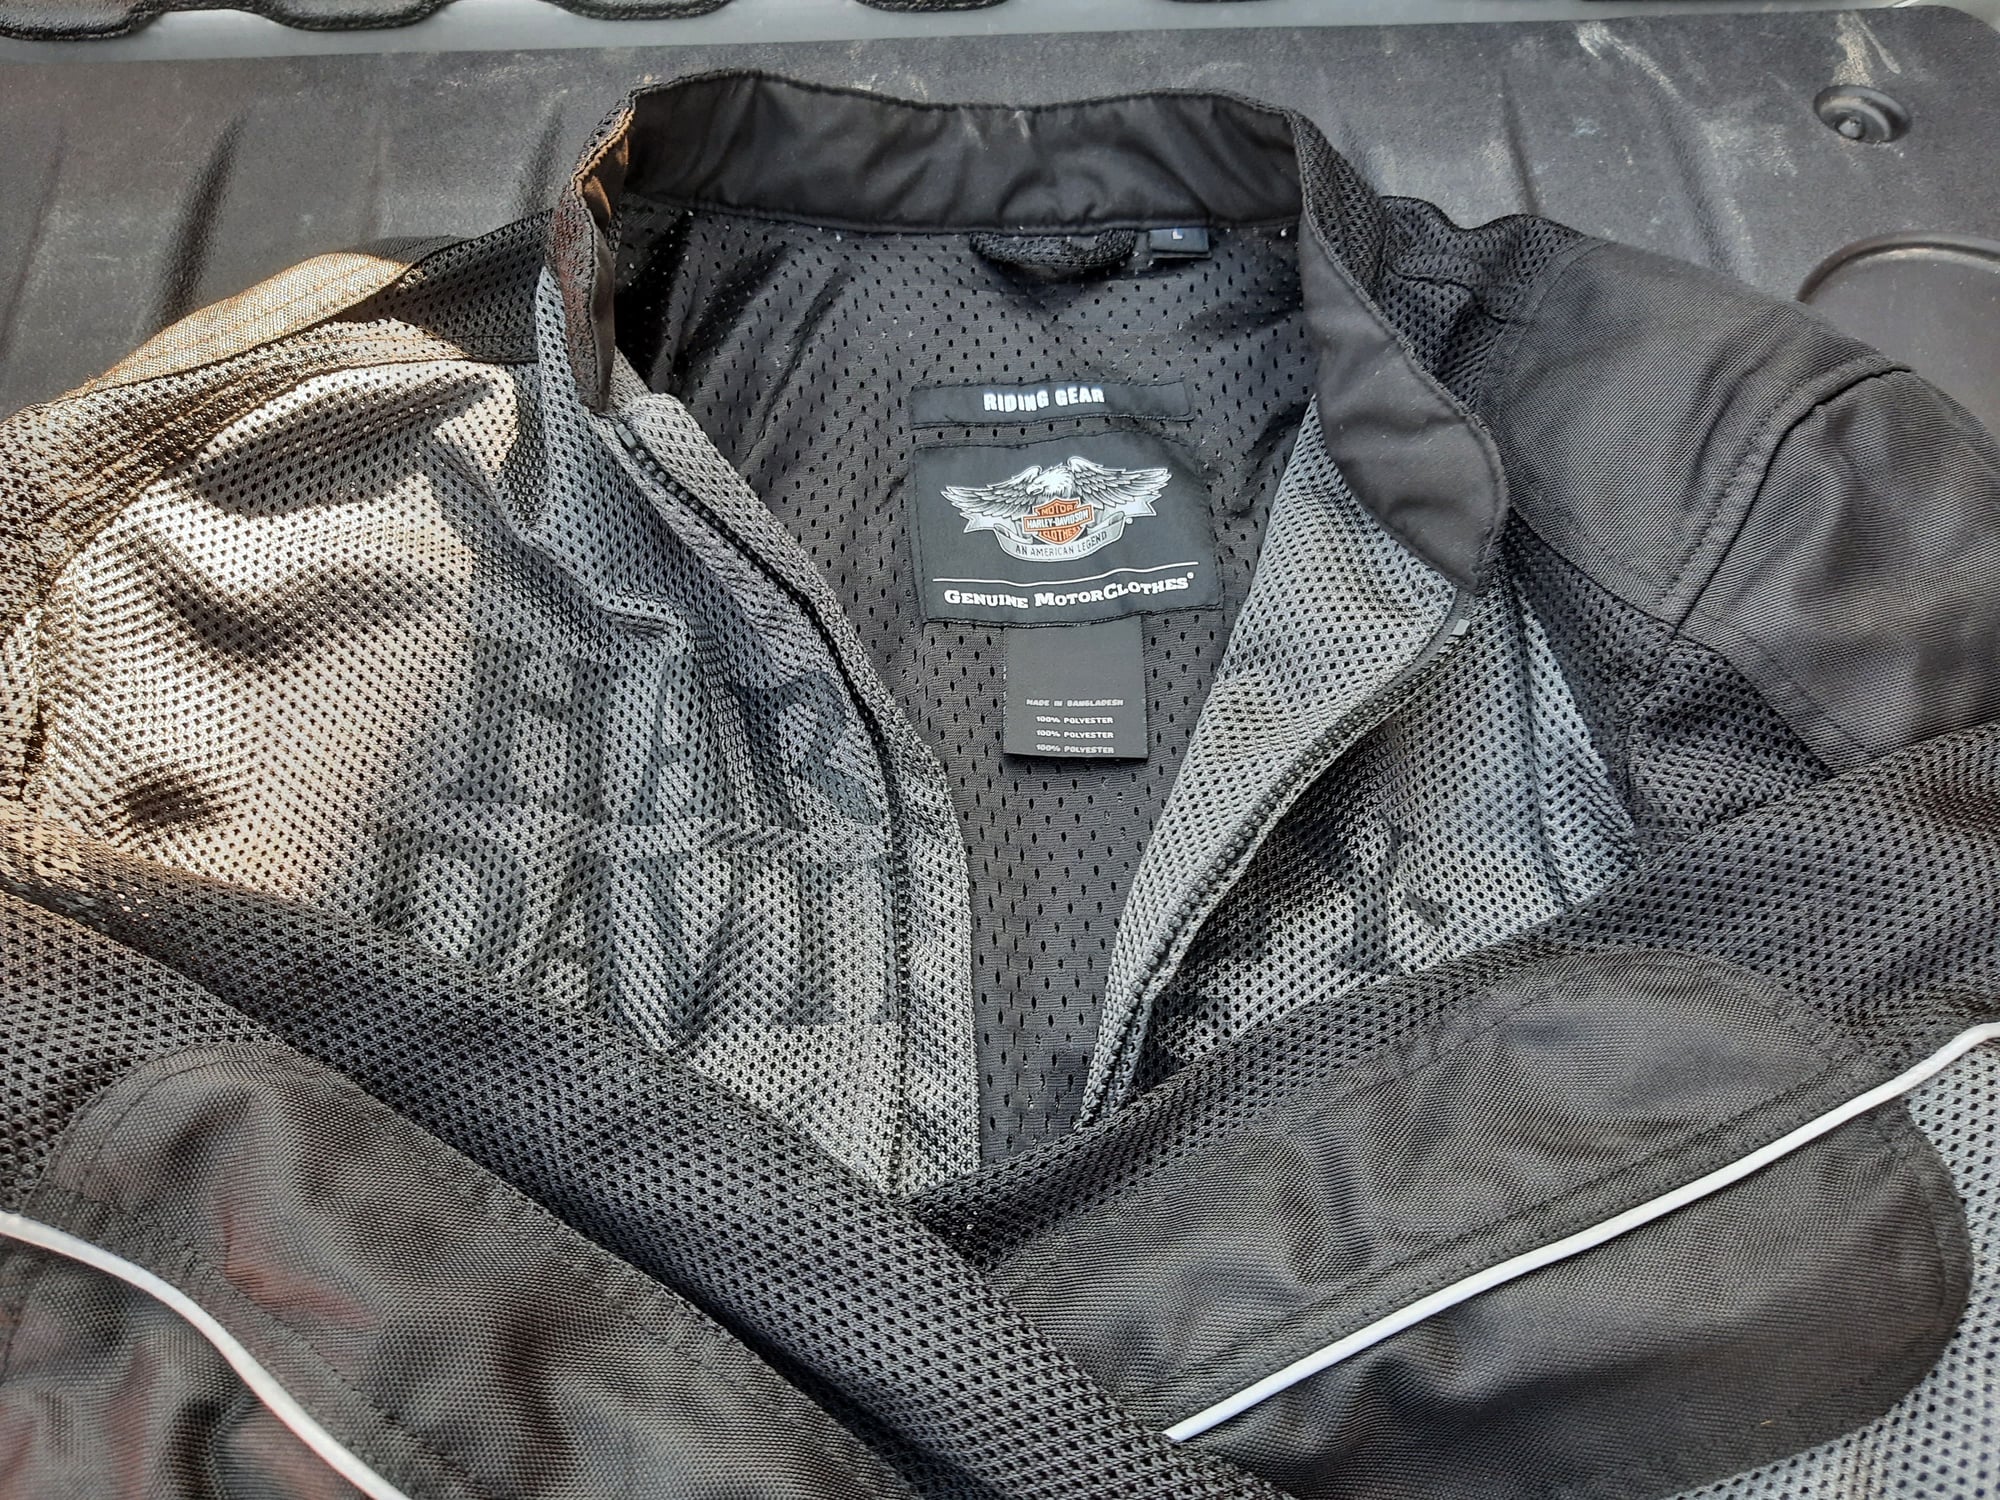 HD Willie G Mesh Riding Jacket - Harley Davidson Forums